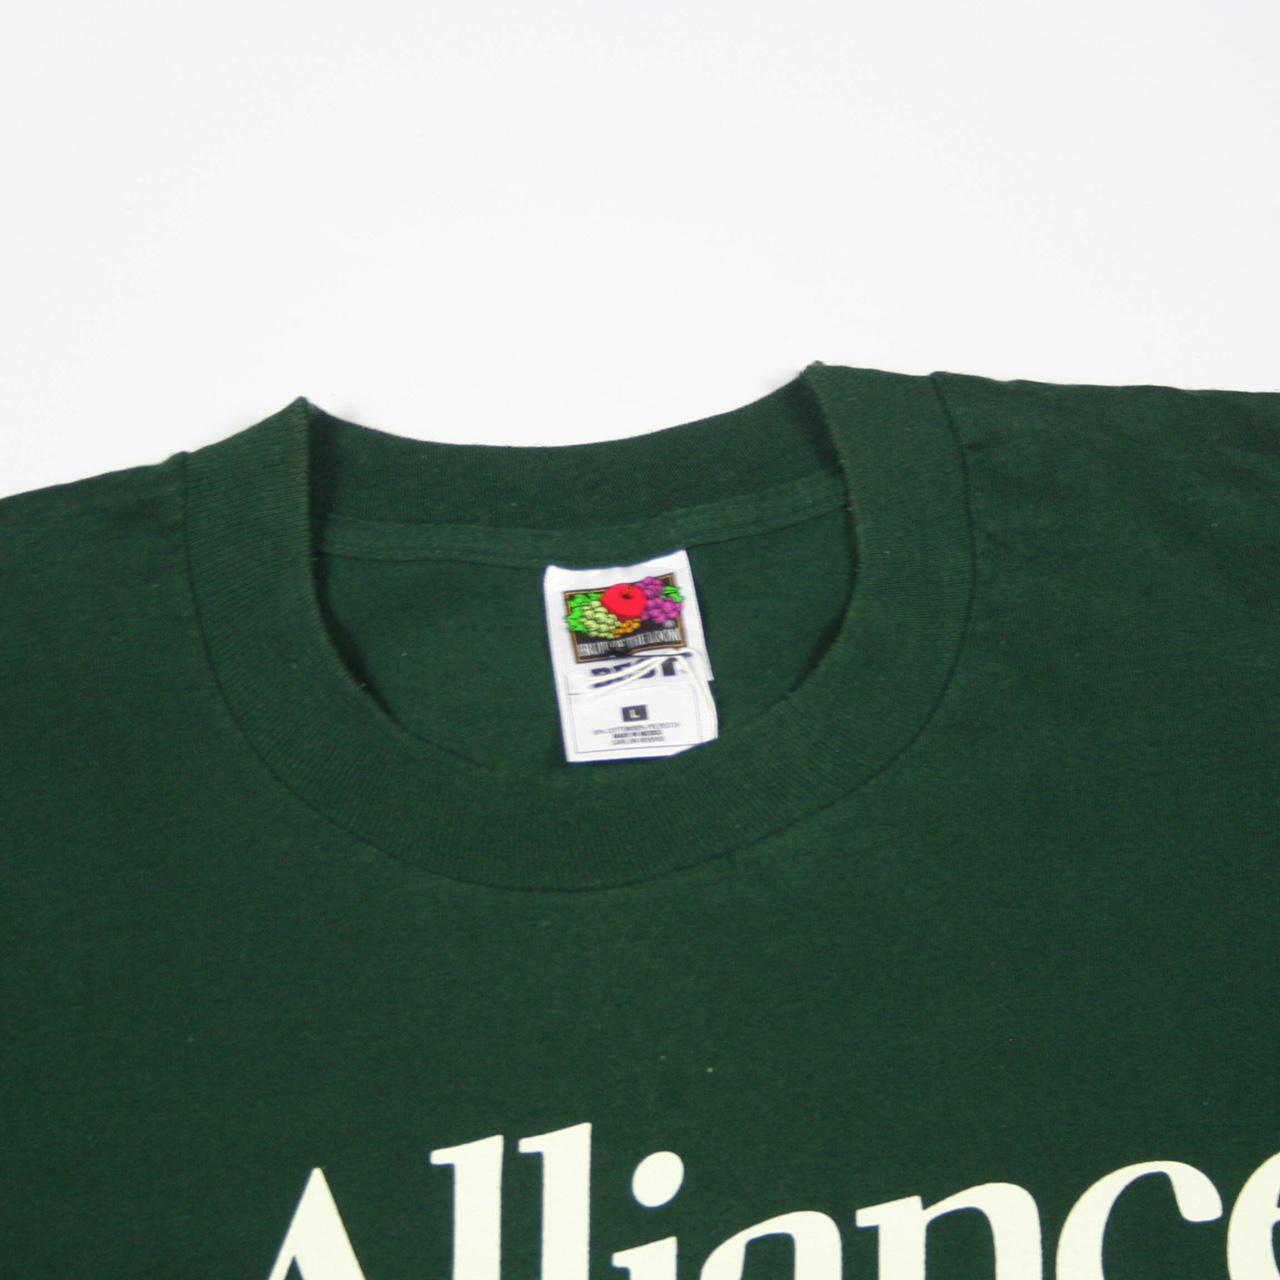 Product Image 3 - Vintage single stitch t shirt
Forest